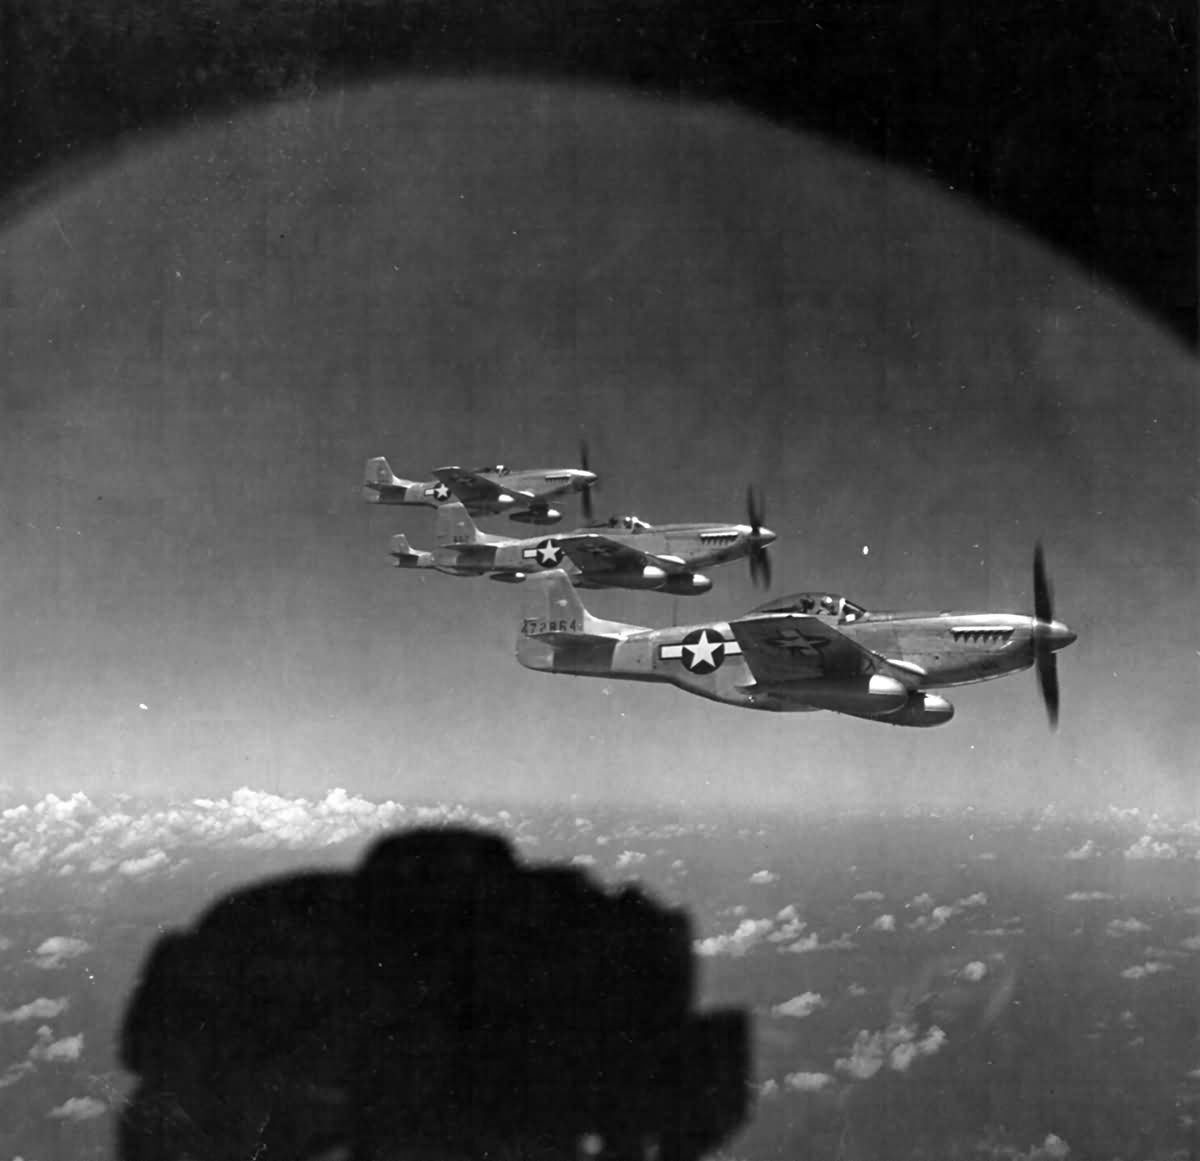 P-51D-25-Na_Mustang_44-72864 viewed from B-29 port gunner blister-2